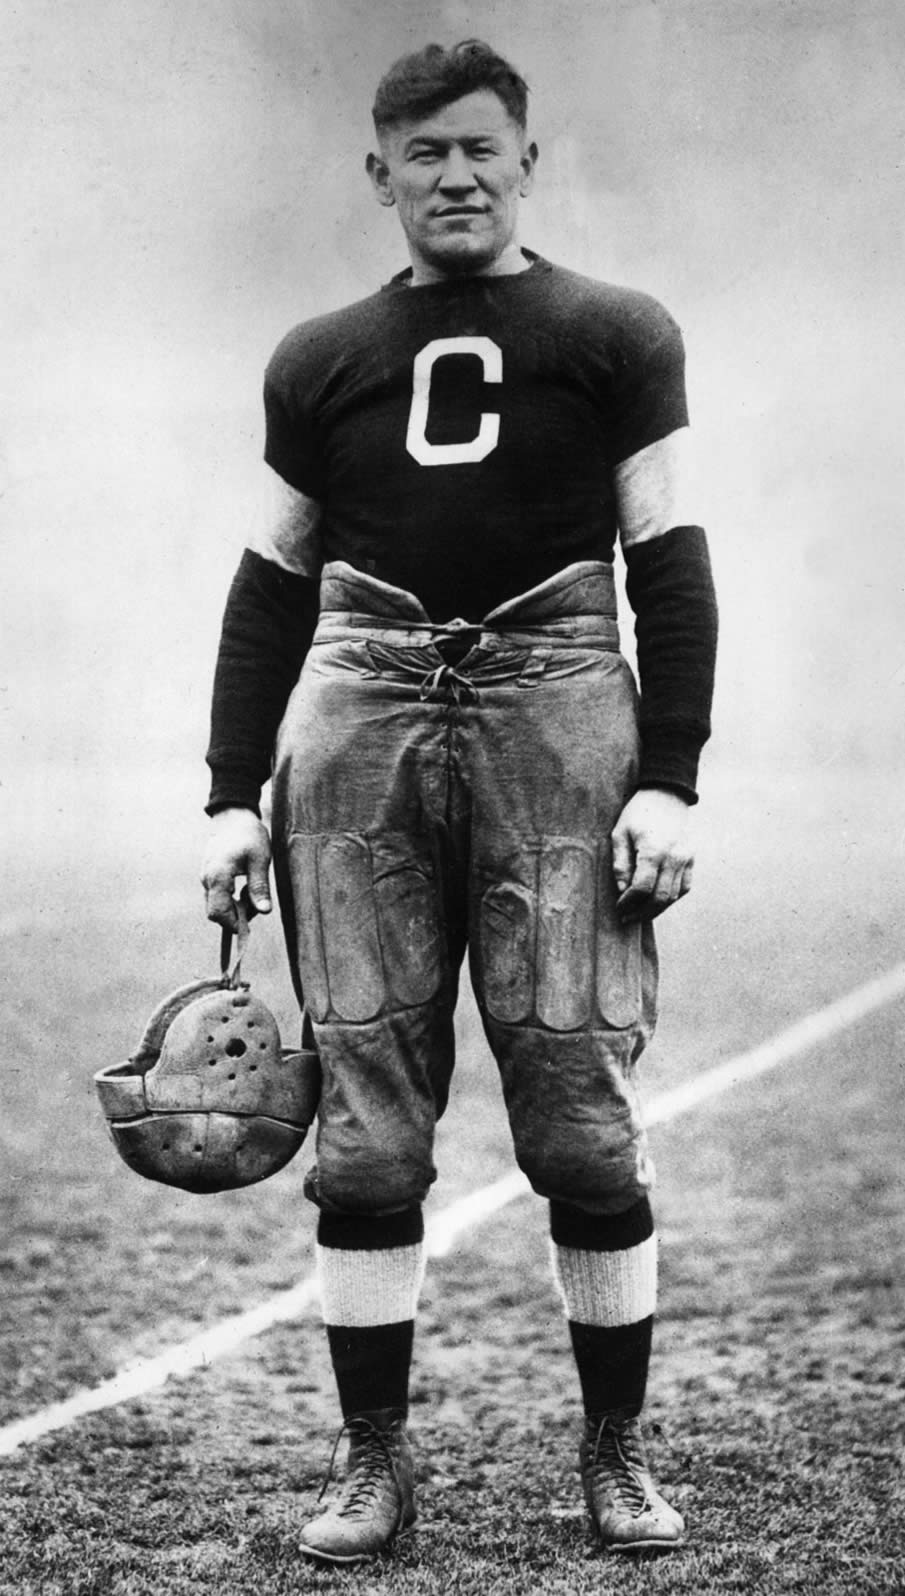 circa_1915_american_athlete_jim_thorpe_posing_in_a_football_uniform_on_a_field.jpg